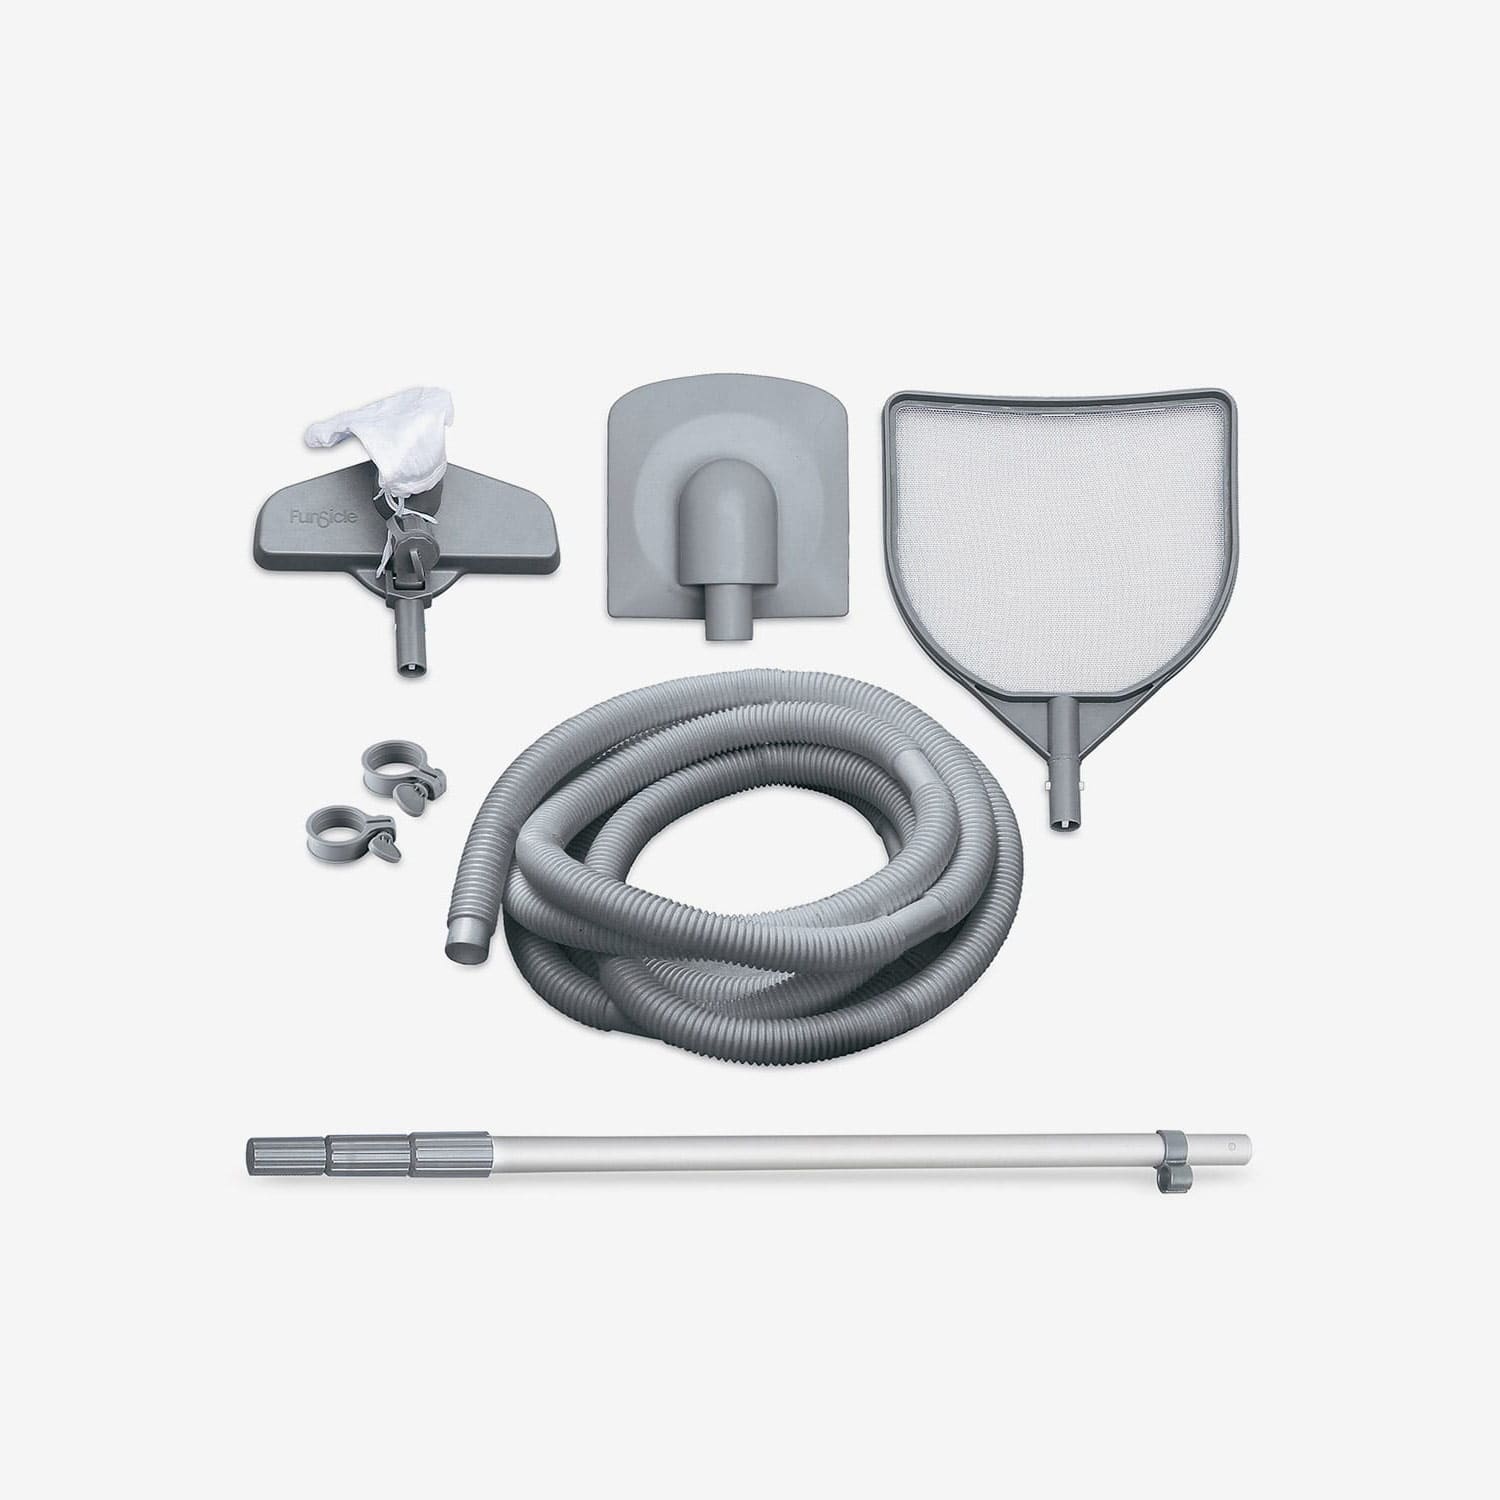 Funsicle deluxe maintenance kit